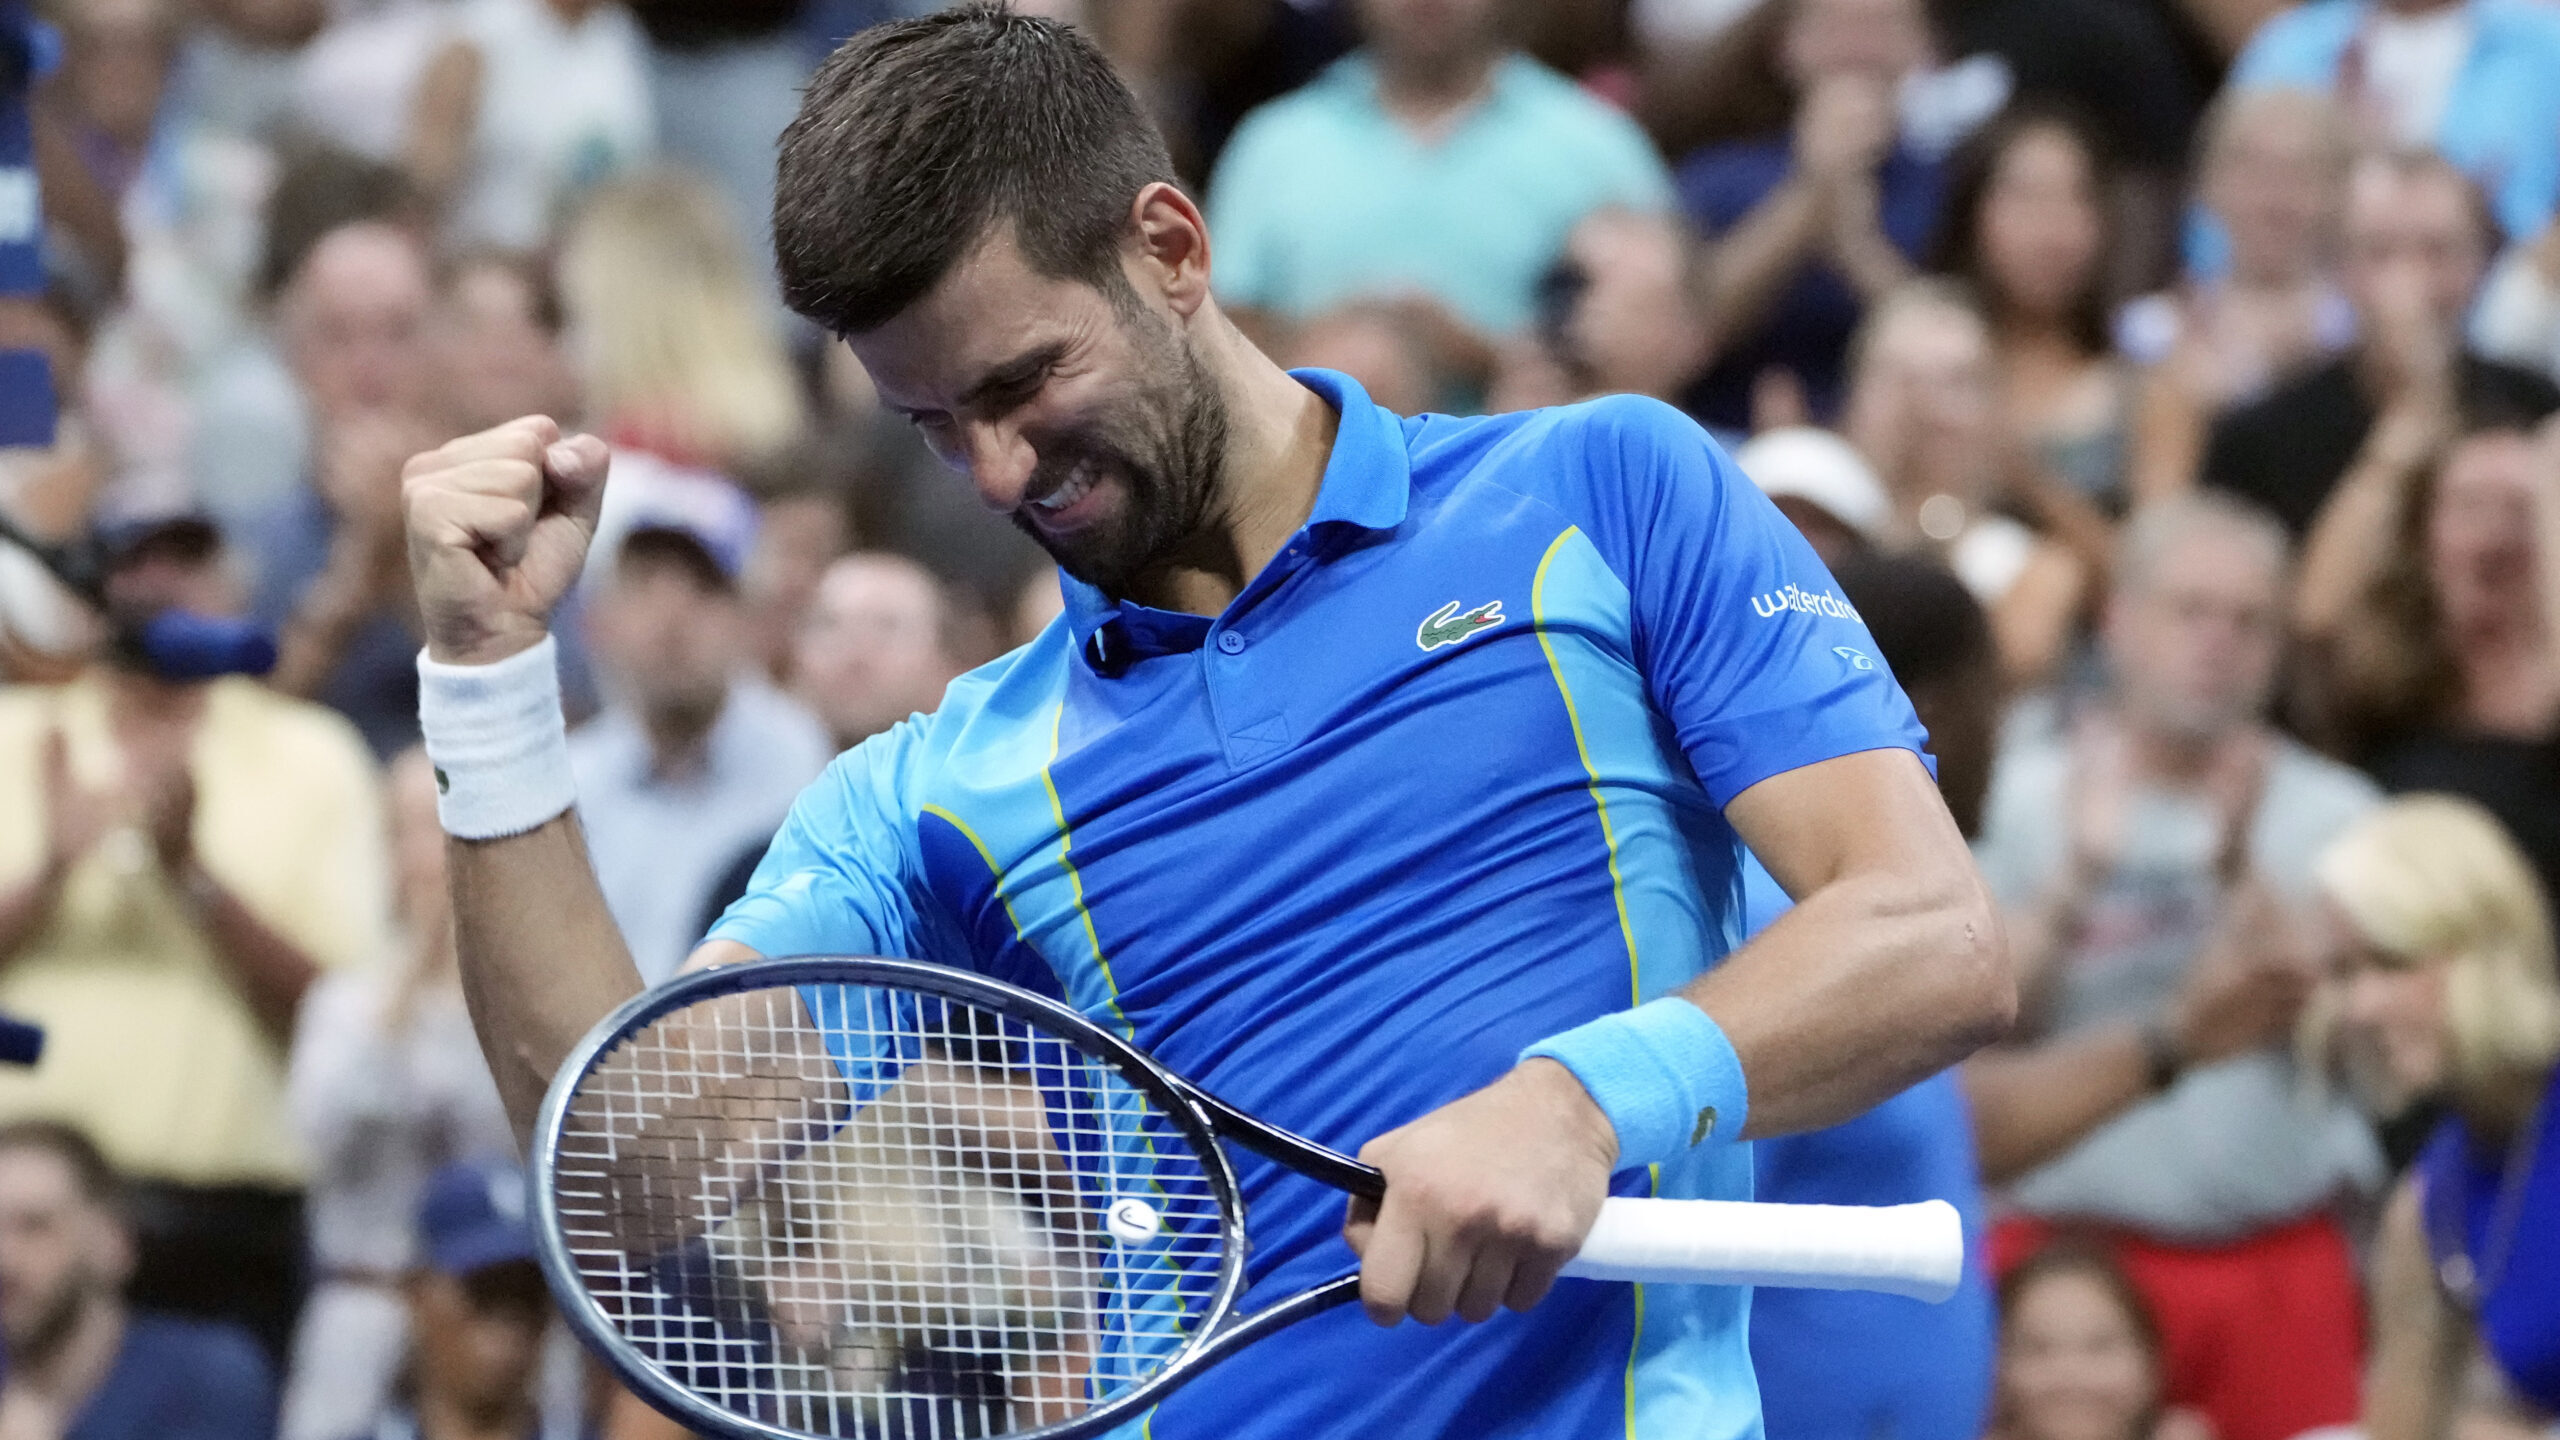 Novak Djokovic wins to reach the US Open quarterfinals